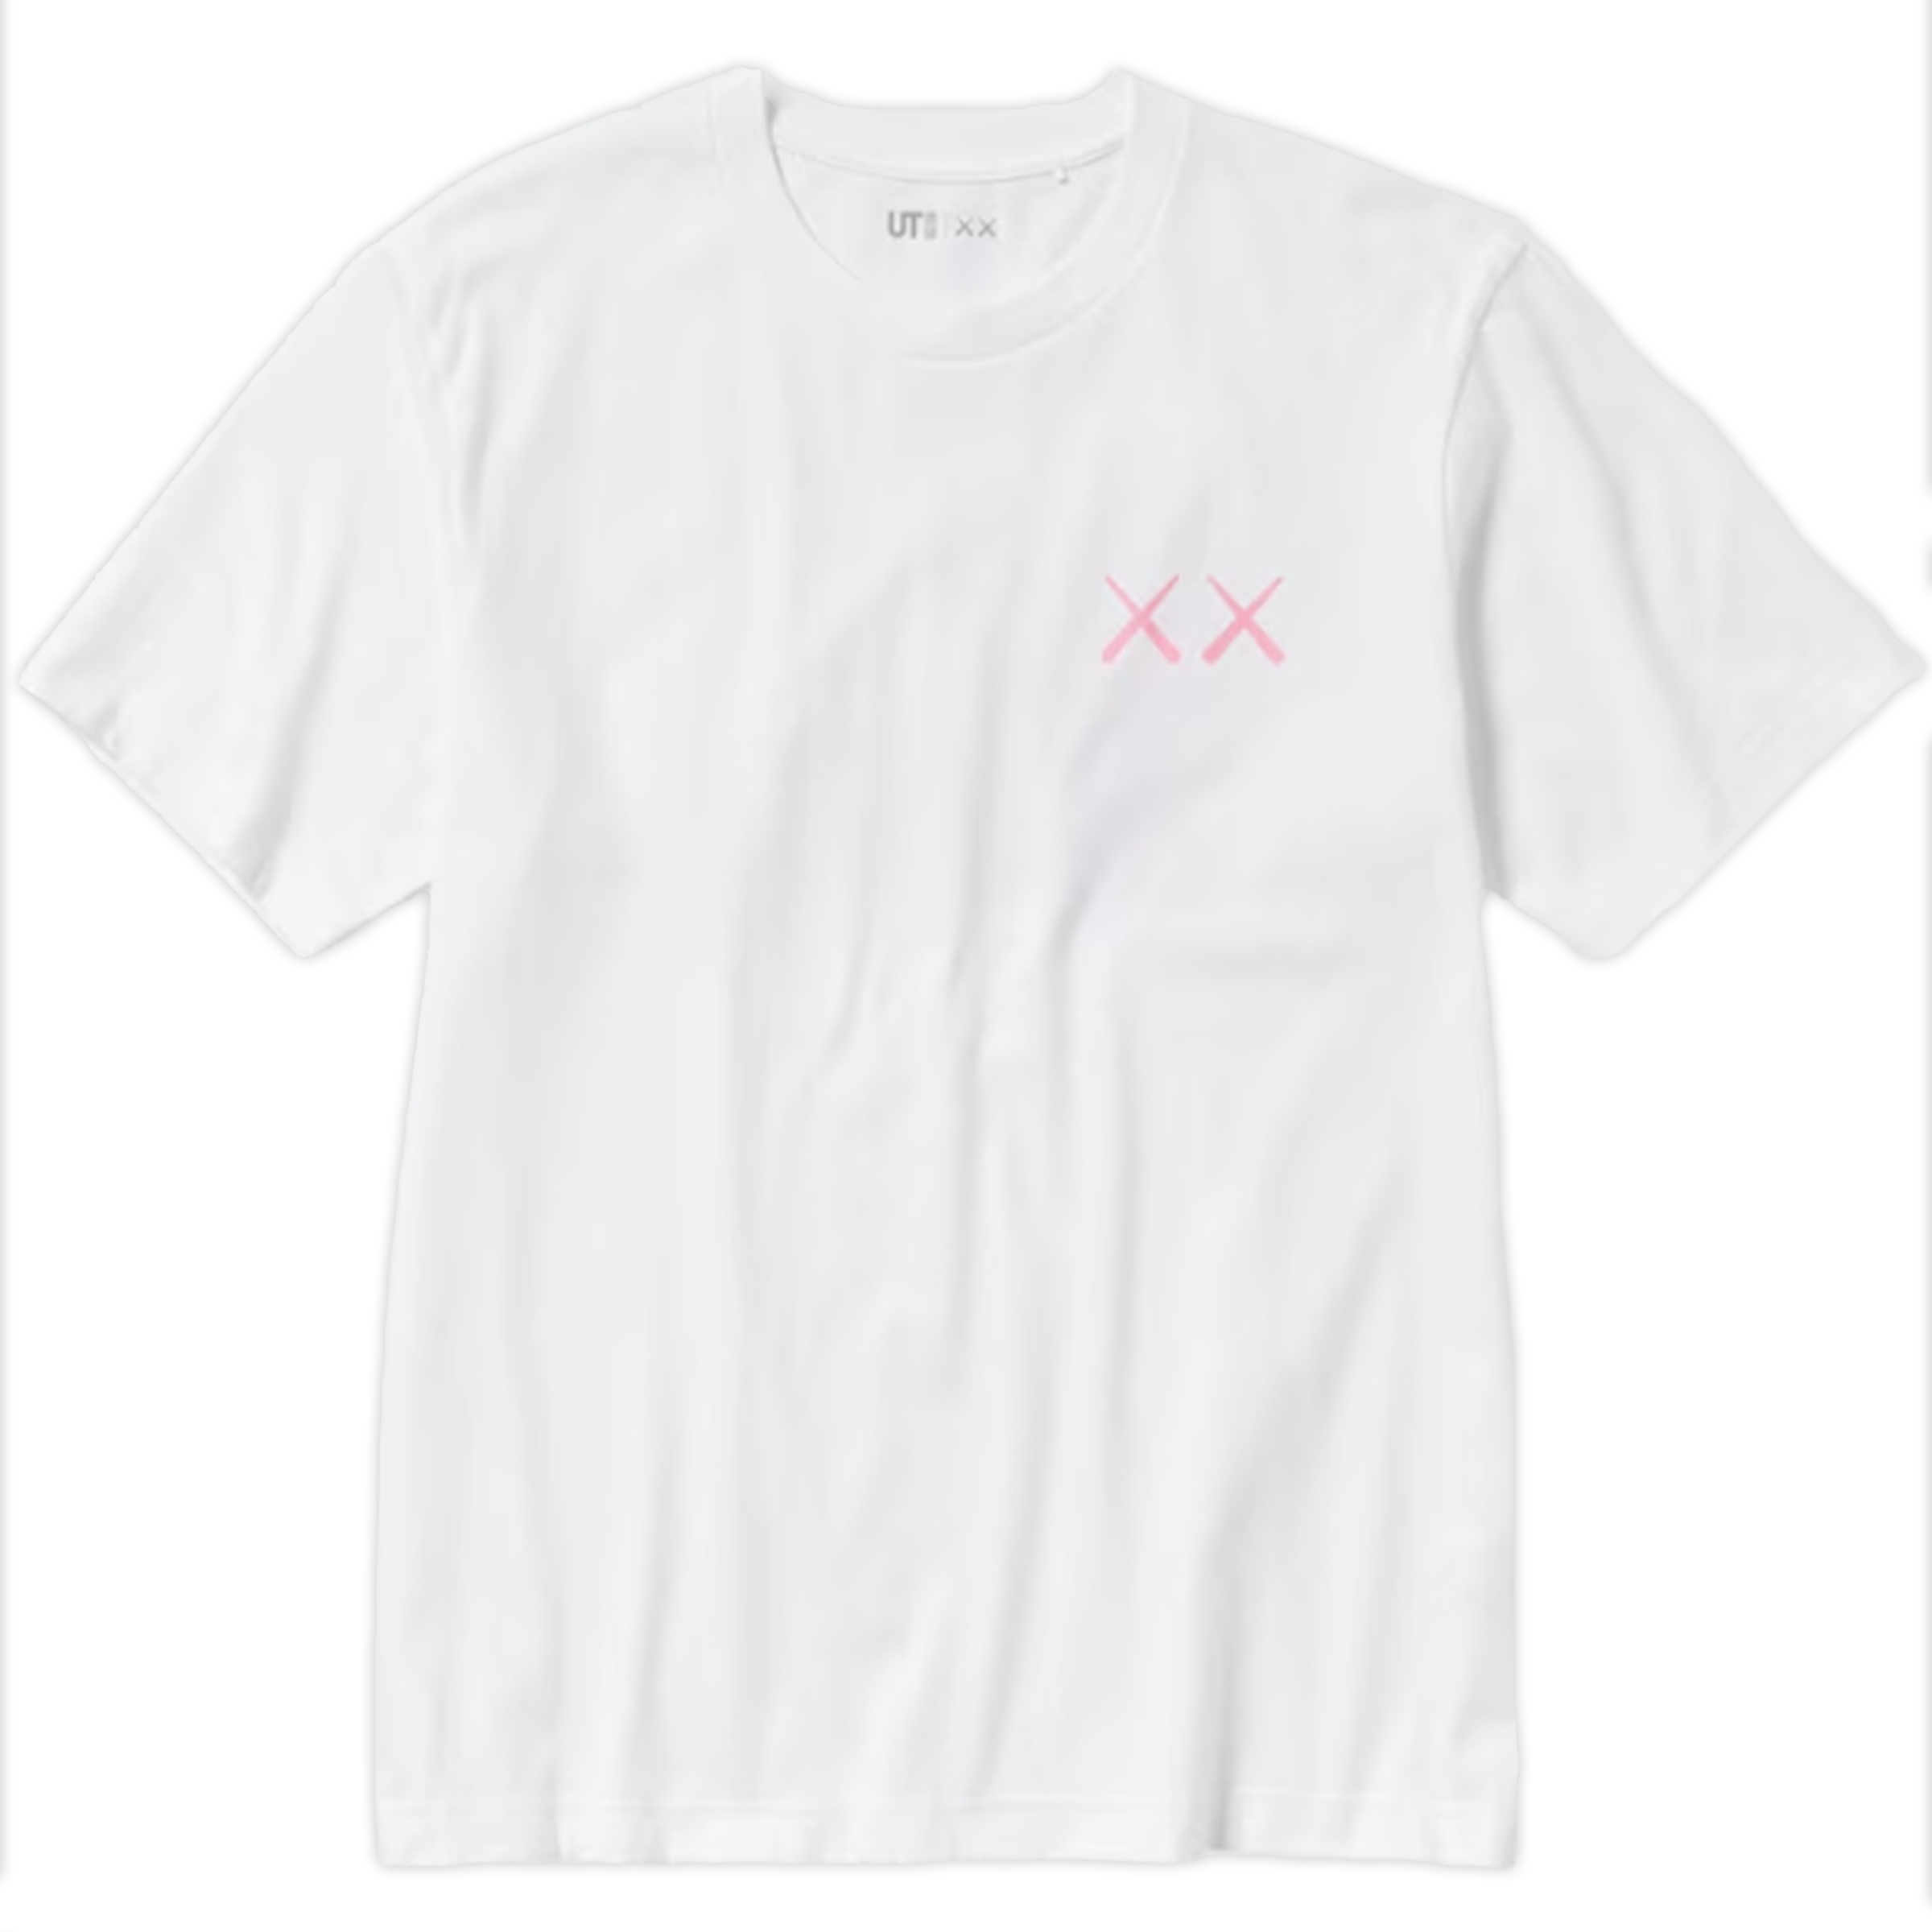 KAWS x UT "Time Off" - T-Shirt